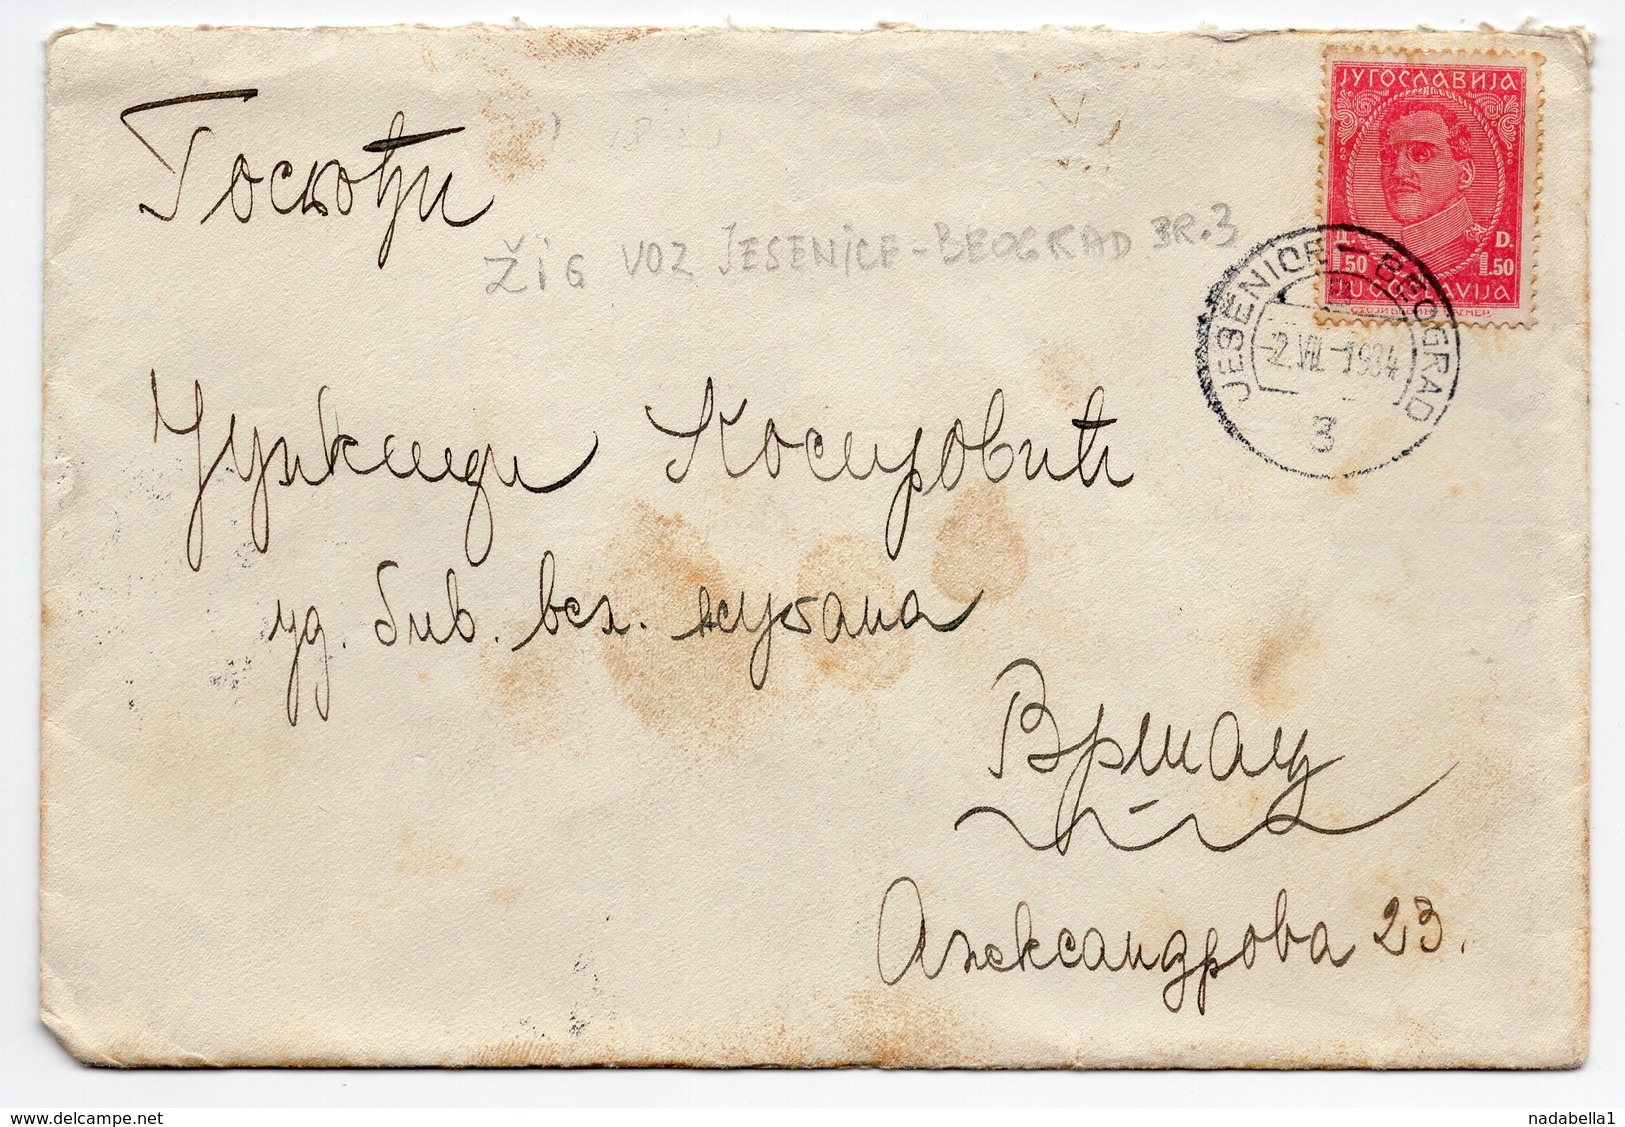 1934 YUGOSLAVIA, SLOVENIA, JESENICE-BEOGRAD TPO 3 - Covers & Documents